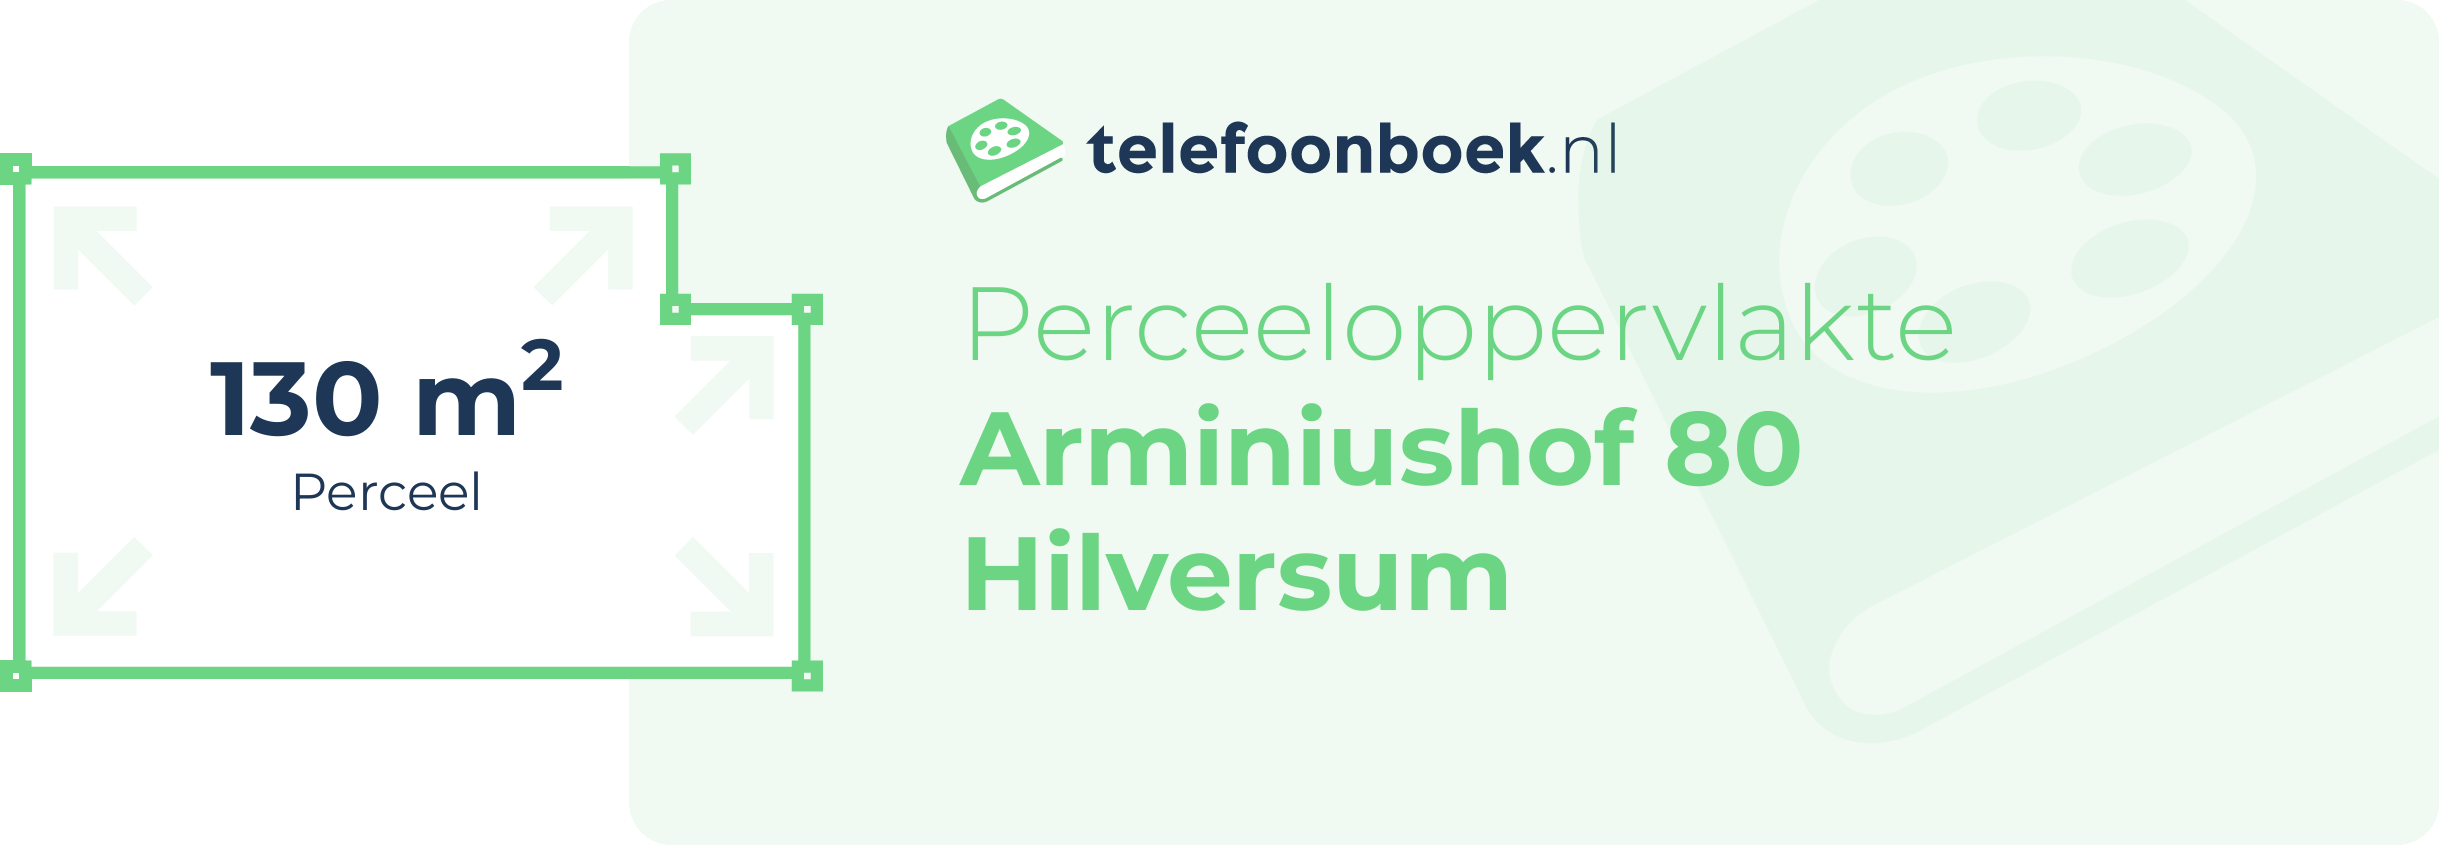 Perceeloppervlakte Arminiushof 80 Hilversum